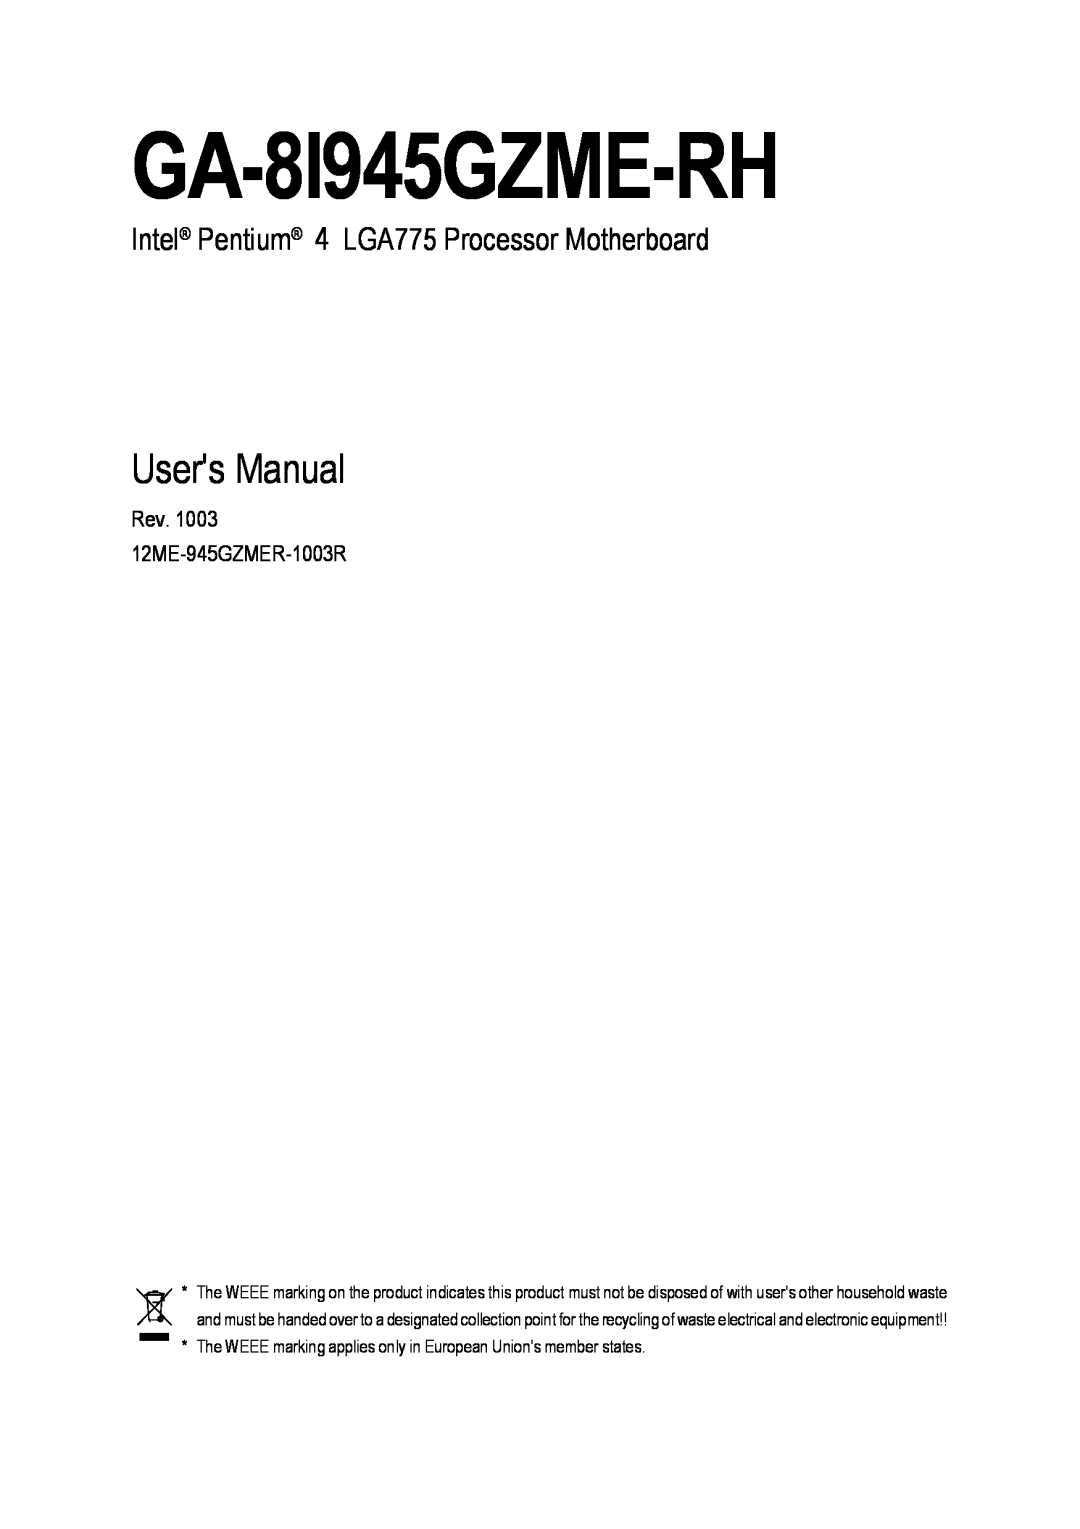 Intel GA-8I945GZME-RH user manual Users Manual, Intel Pentium 4 LGA775 Processor Motherboard 